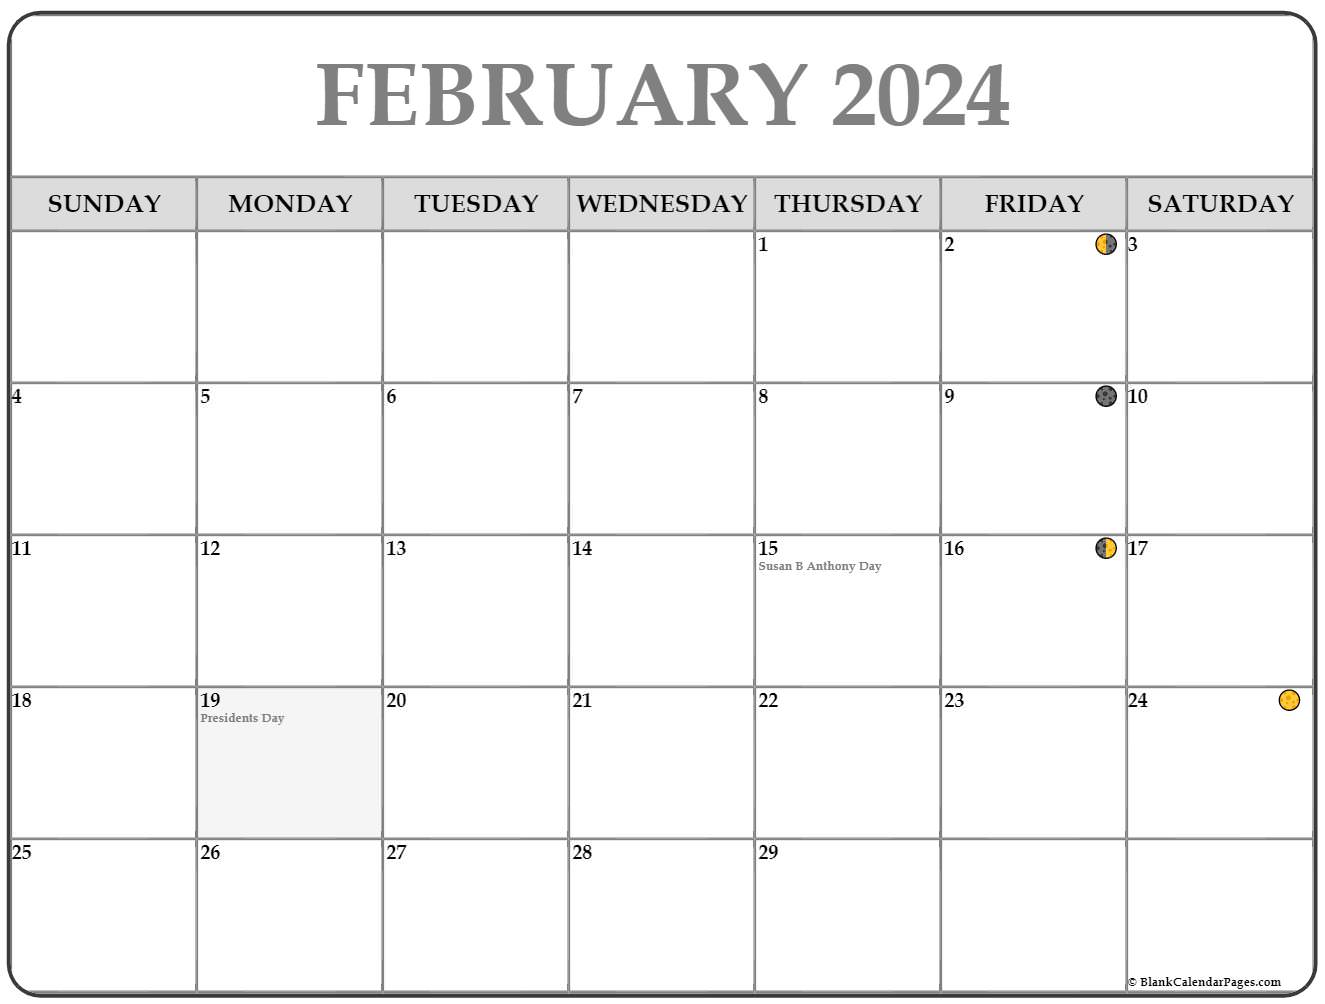 Lunar Calendar February 2022 February 2022 Lunar Calendar | Moon Phase Calendar